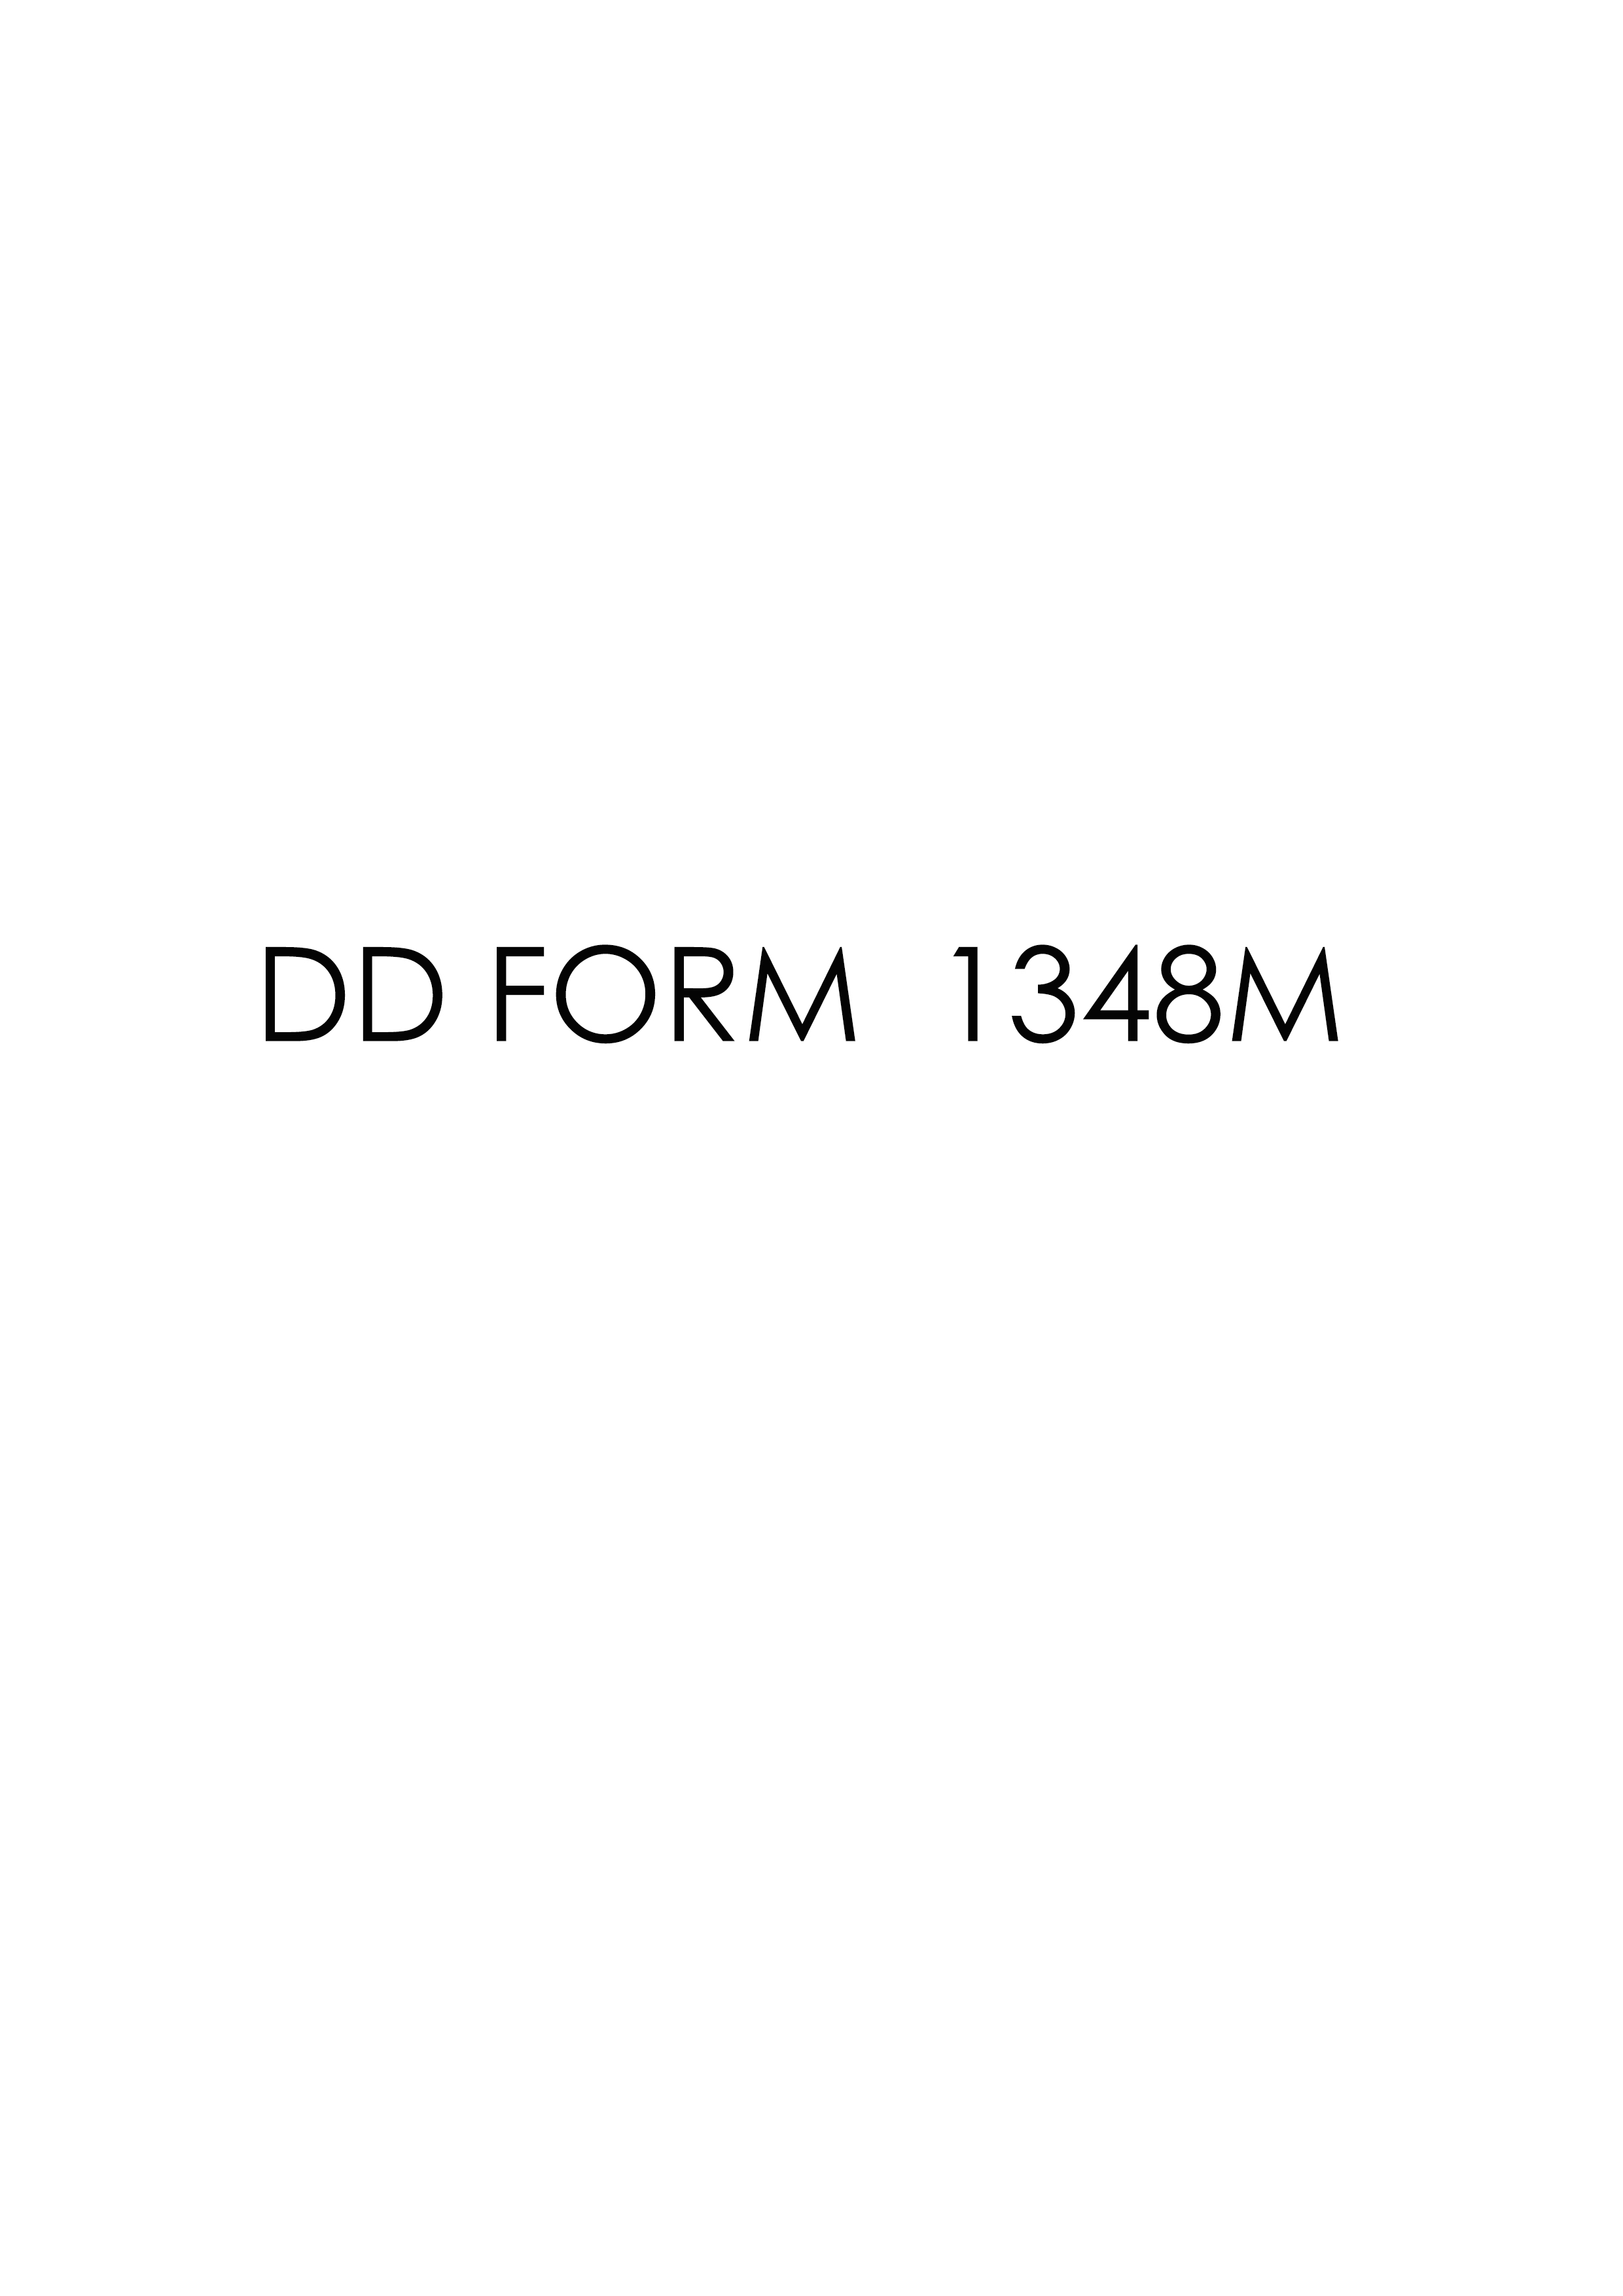 Download dd 1348M Form